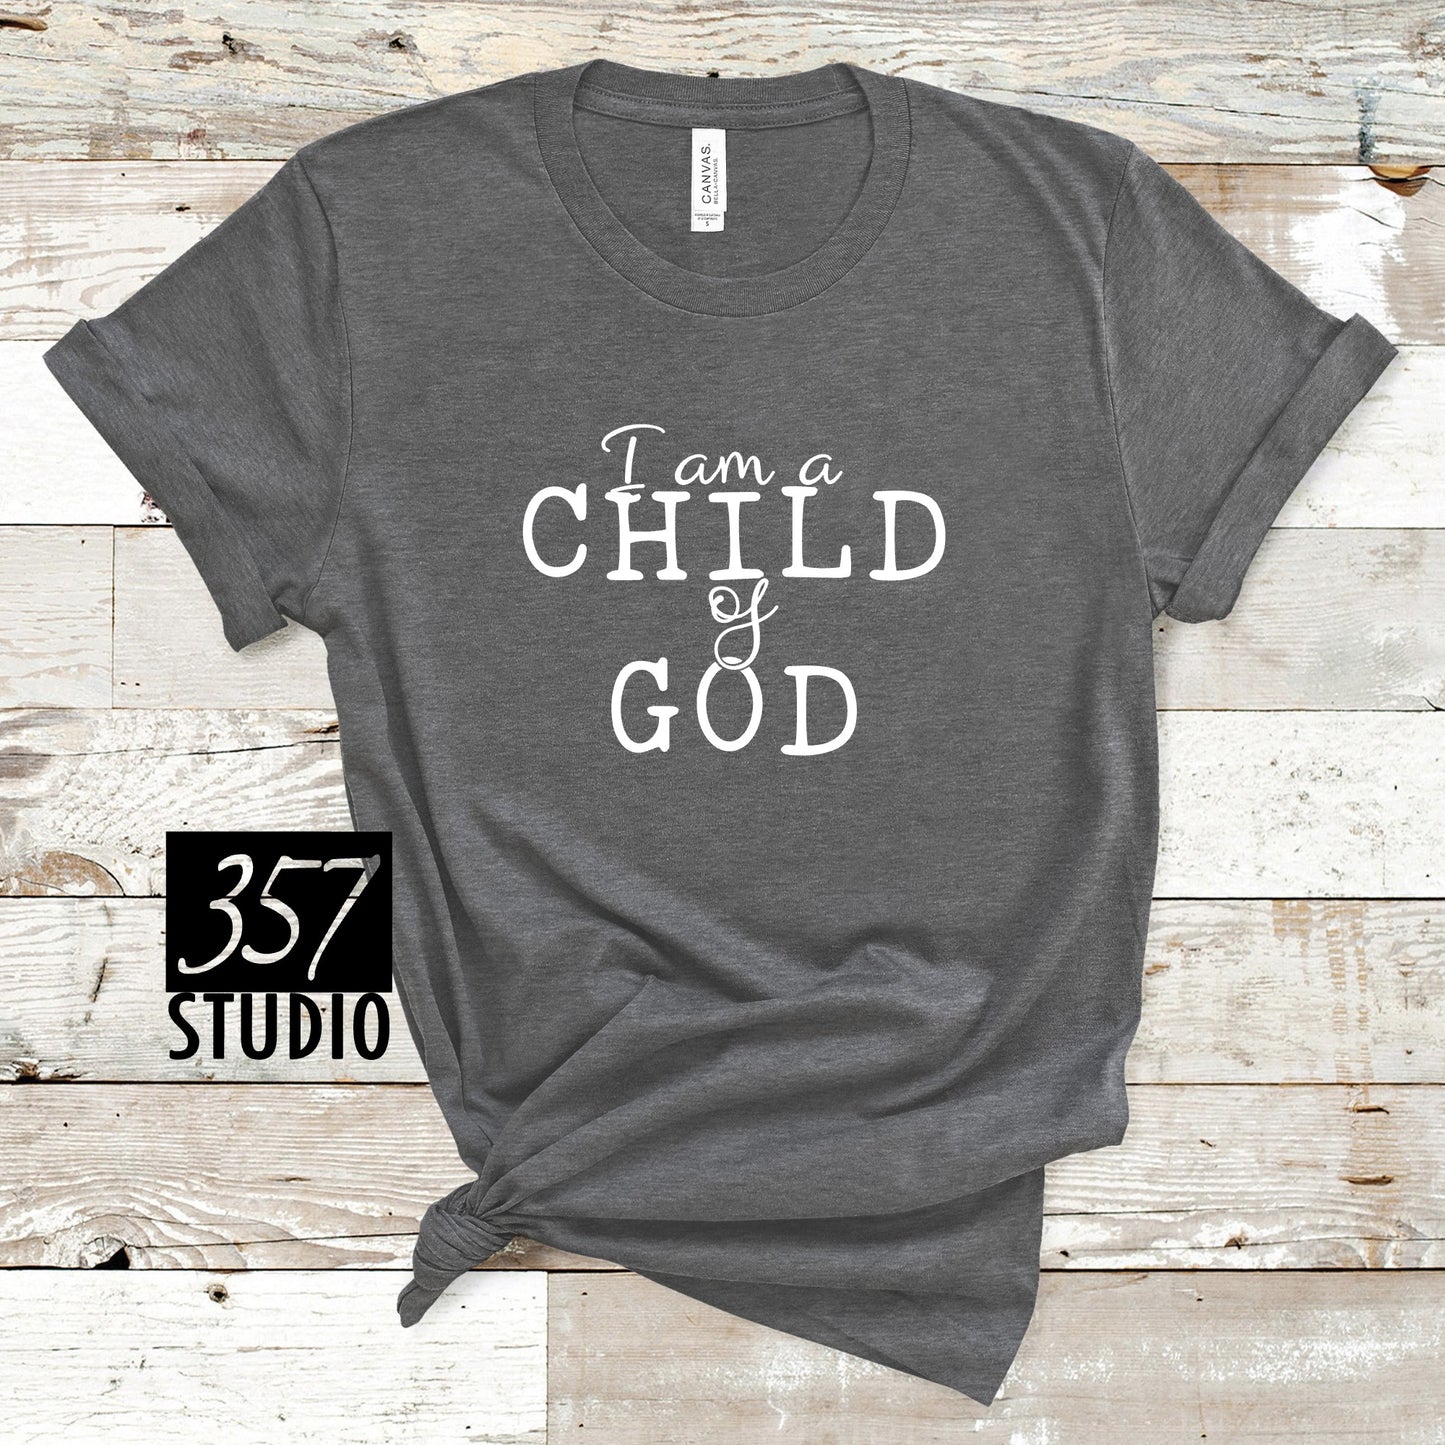 I am a Child of GOD